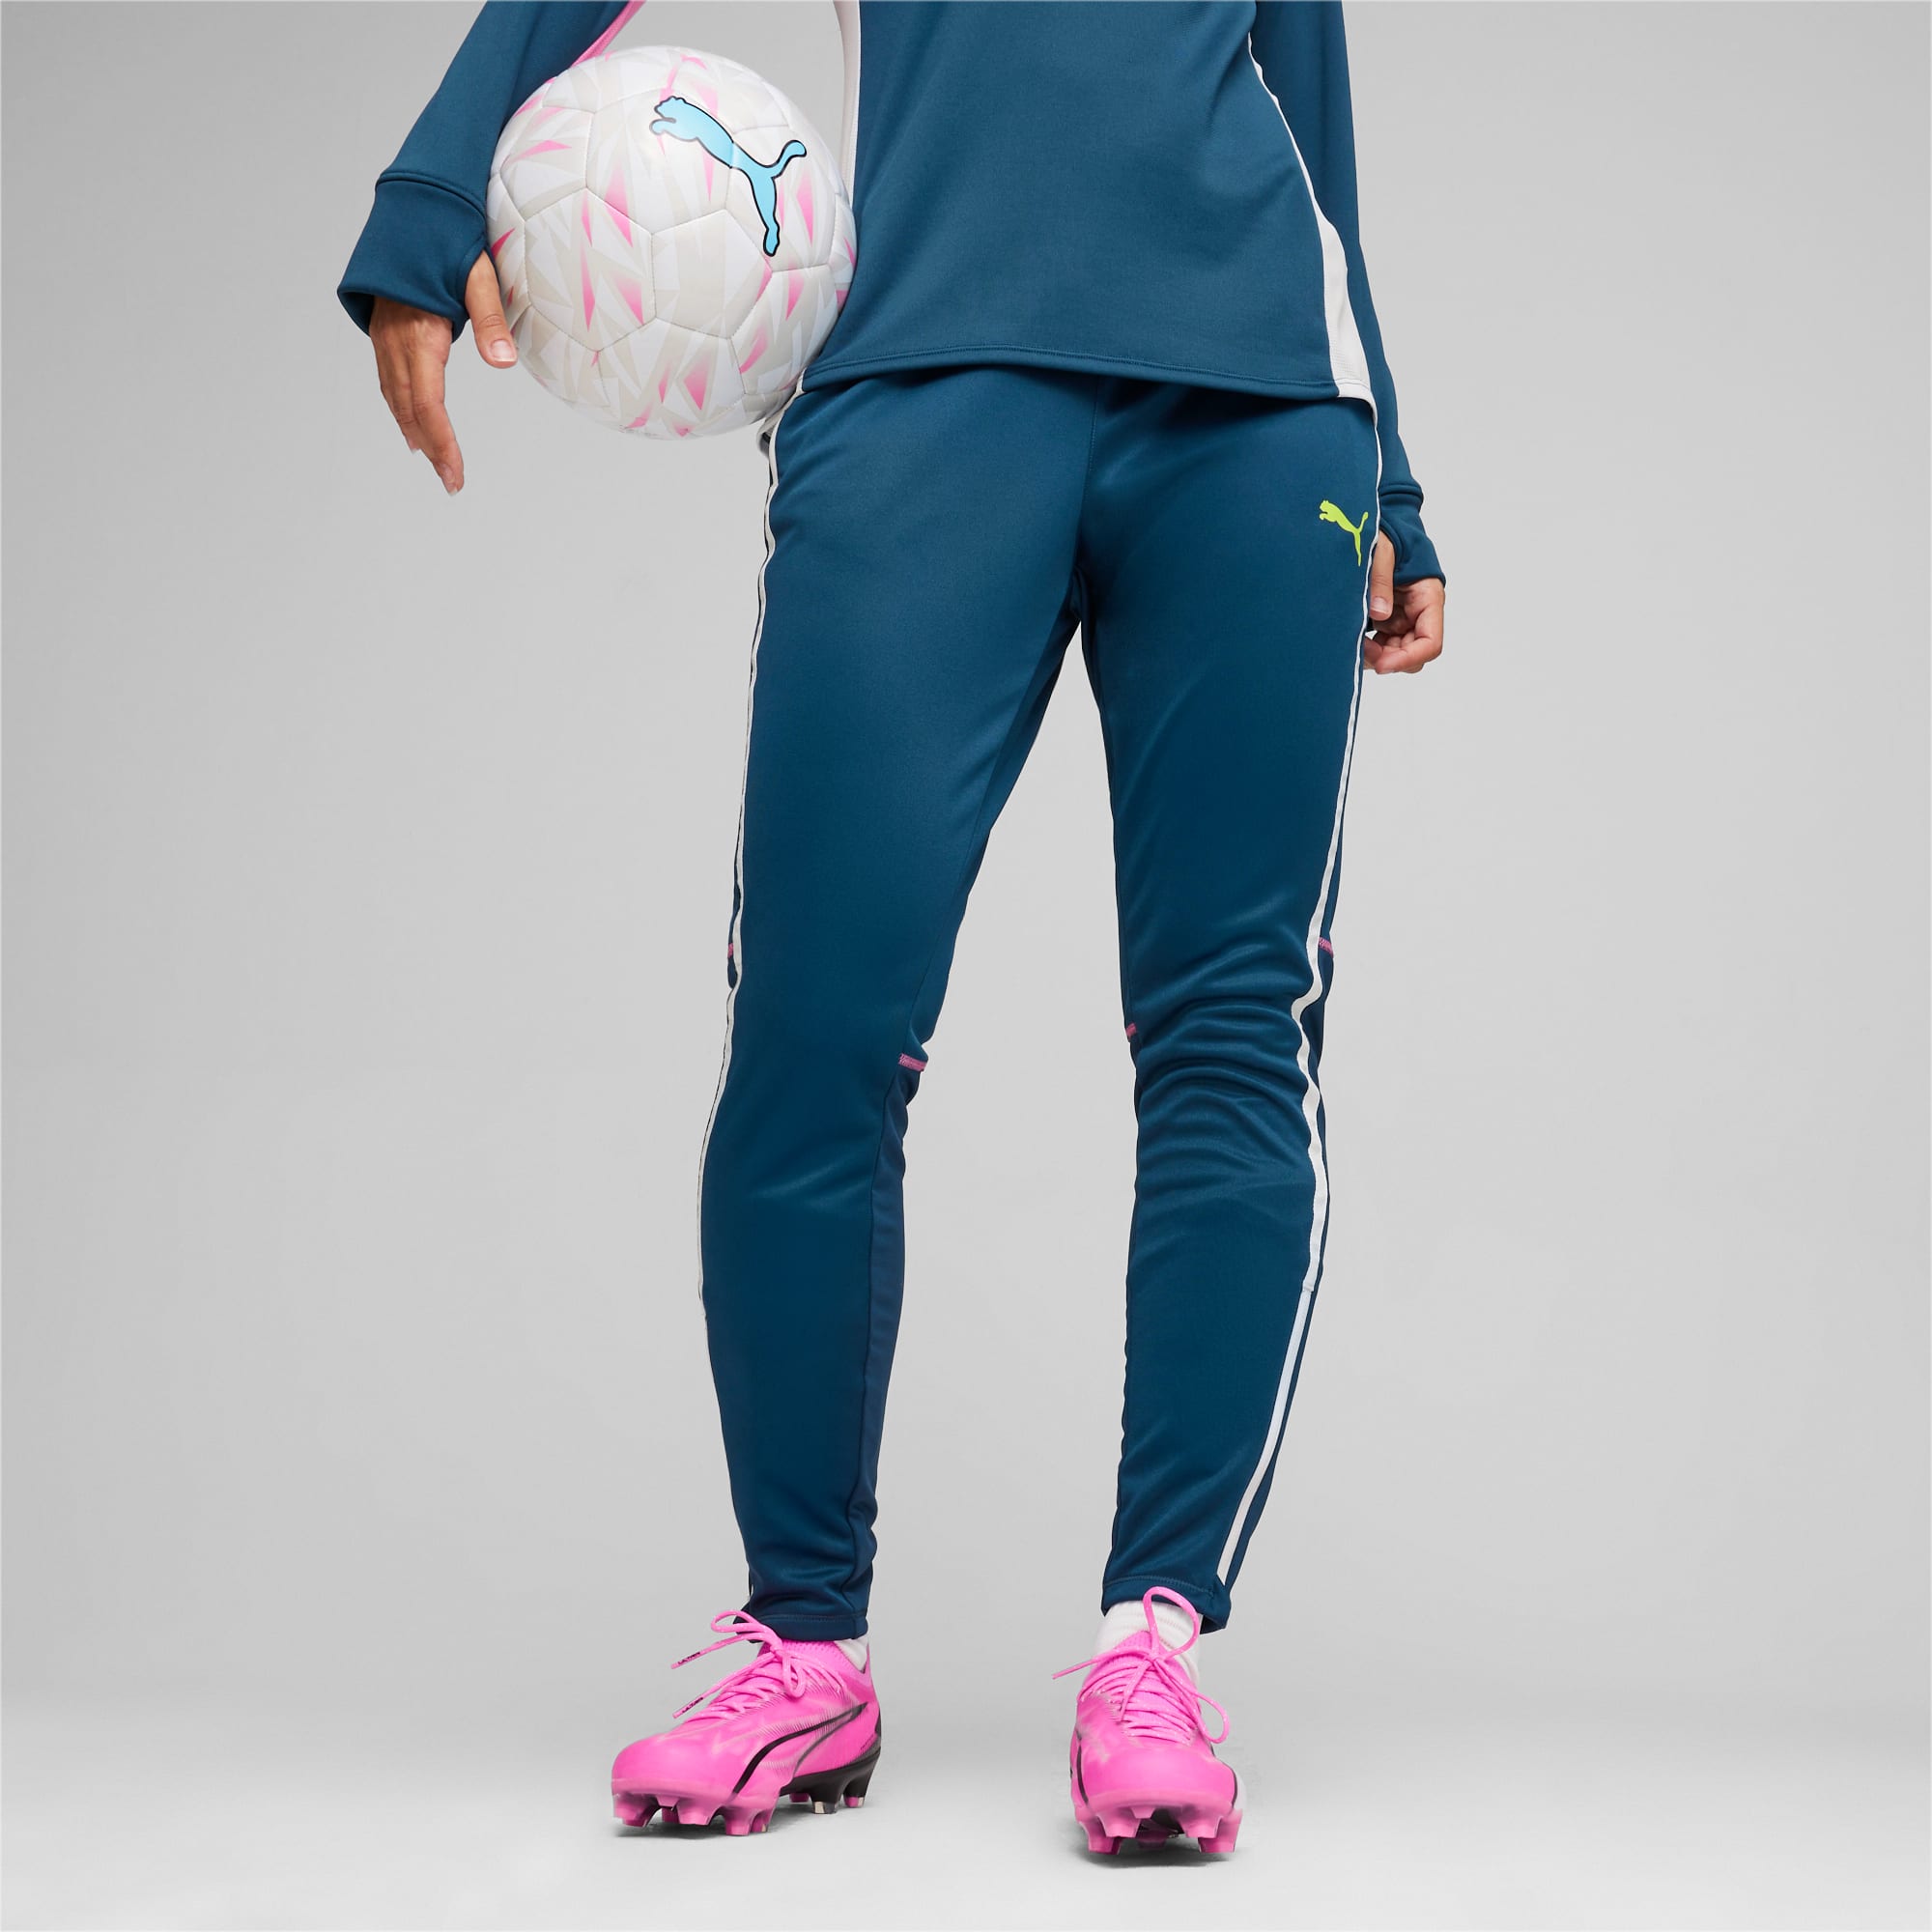 individualBLAZE Women\'s Football Training Pants | green | PUMA